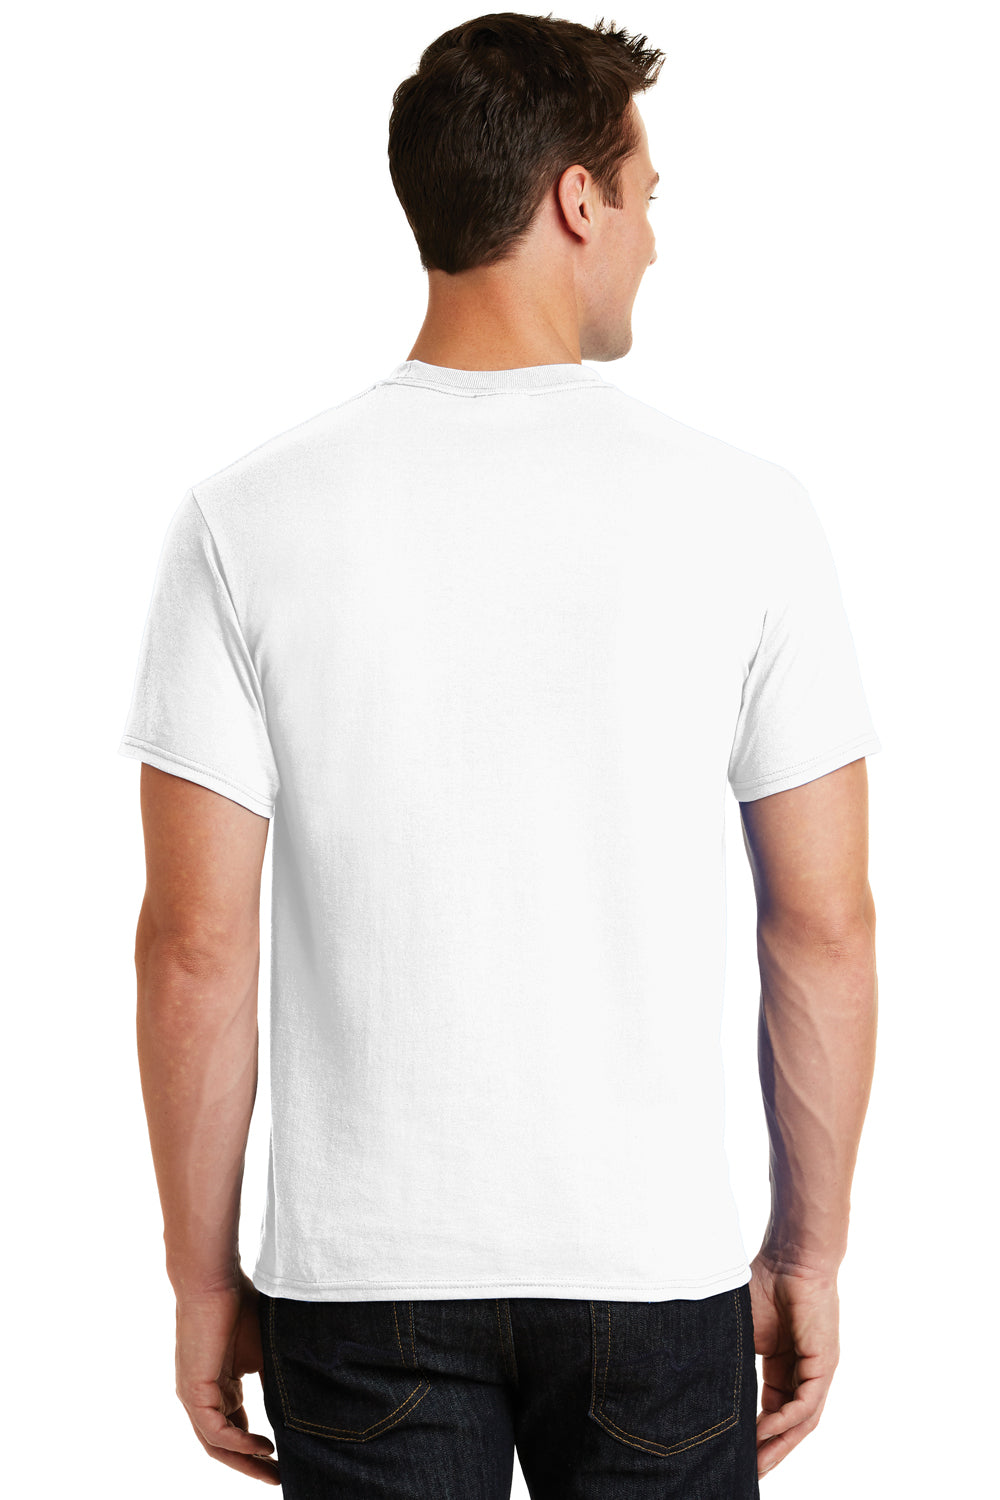 Port & Company PC55 Mens Core Short Sleeve Crewneck T-Shirt White Back